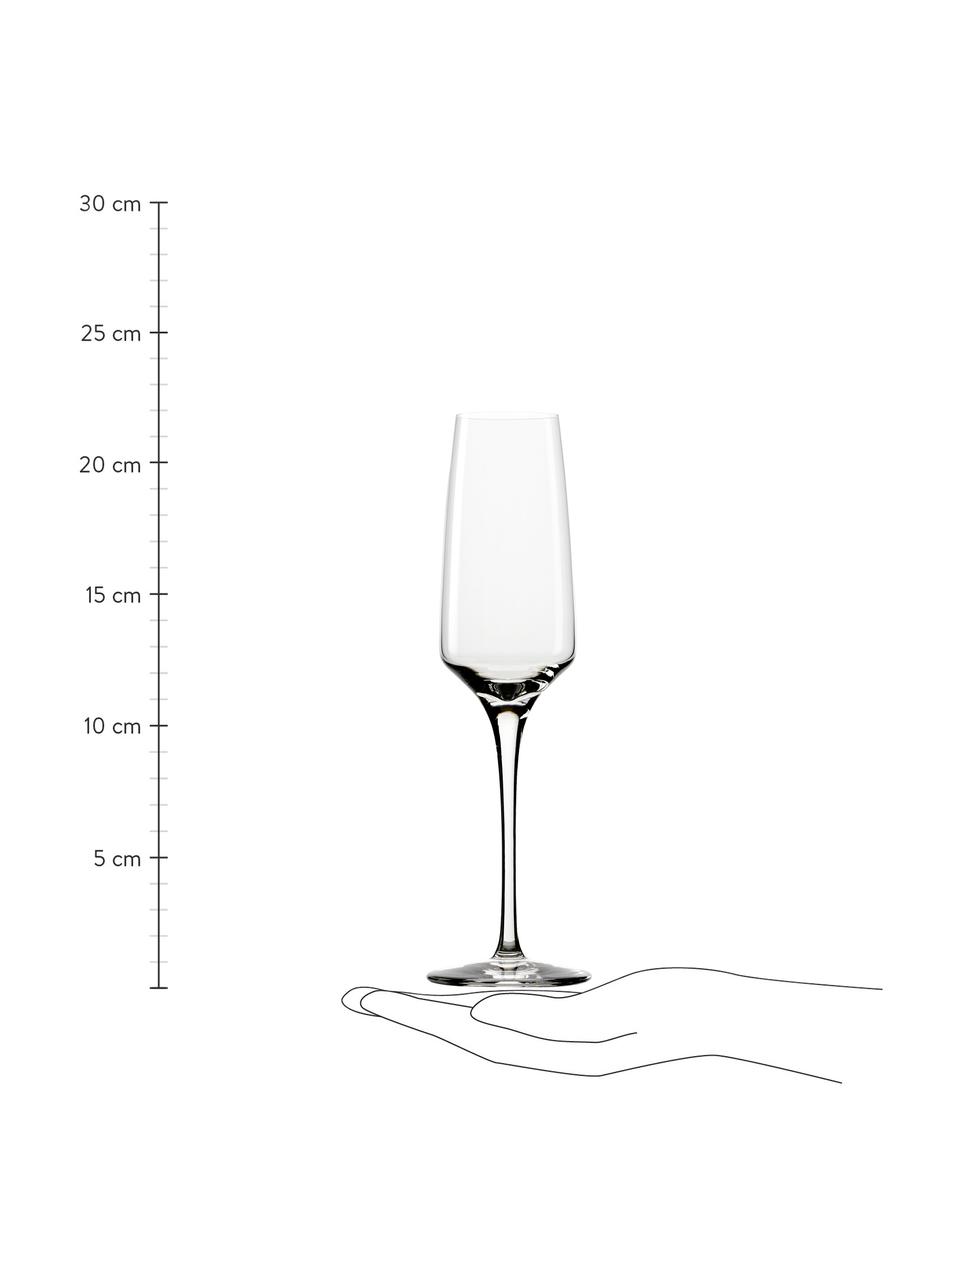 Champagneglazen Experience, 6 stuks, Kristalglas, Transparant, Ø 6 x H 22 cm, 190 ml